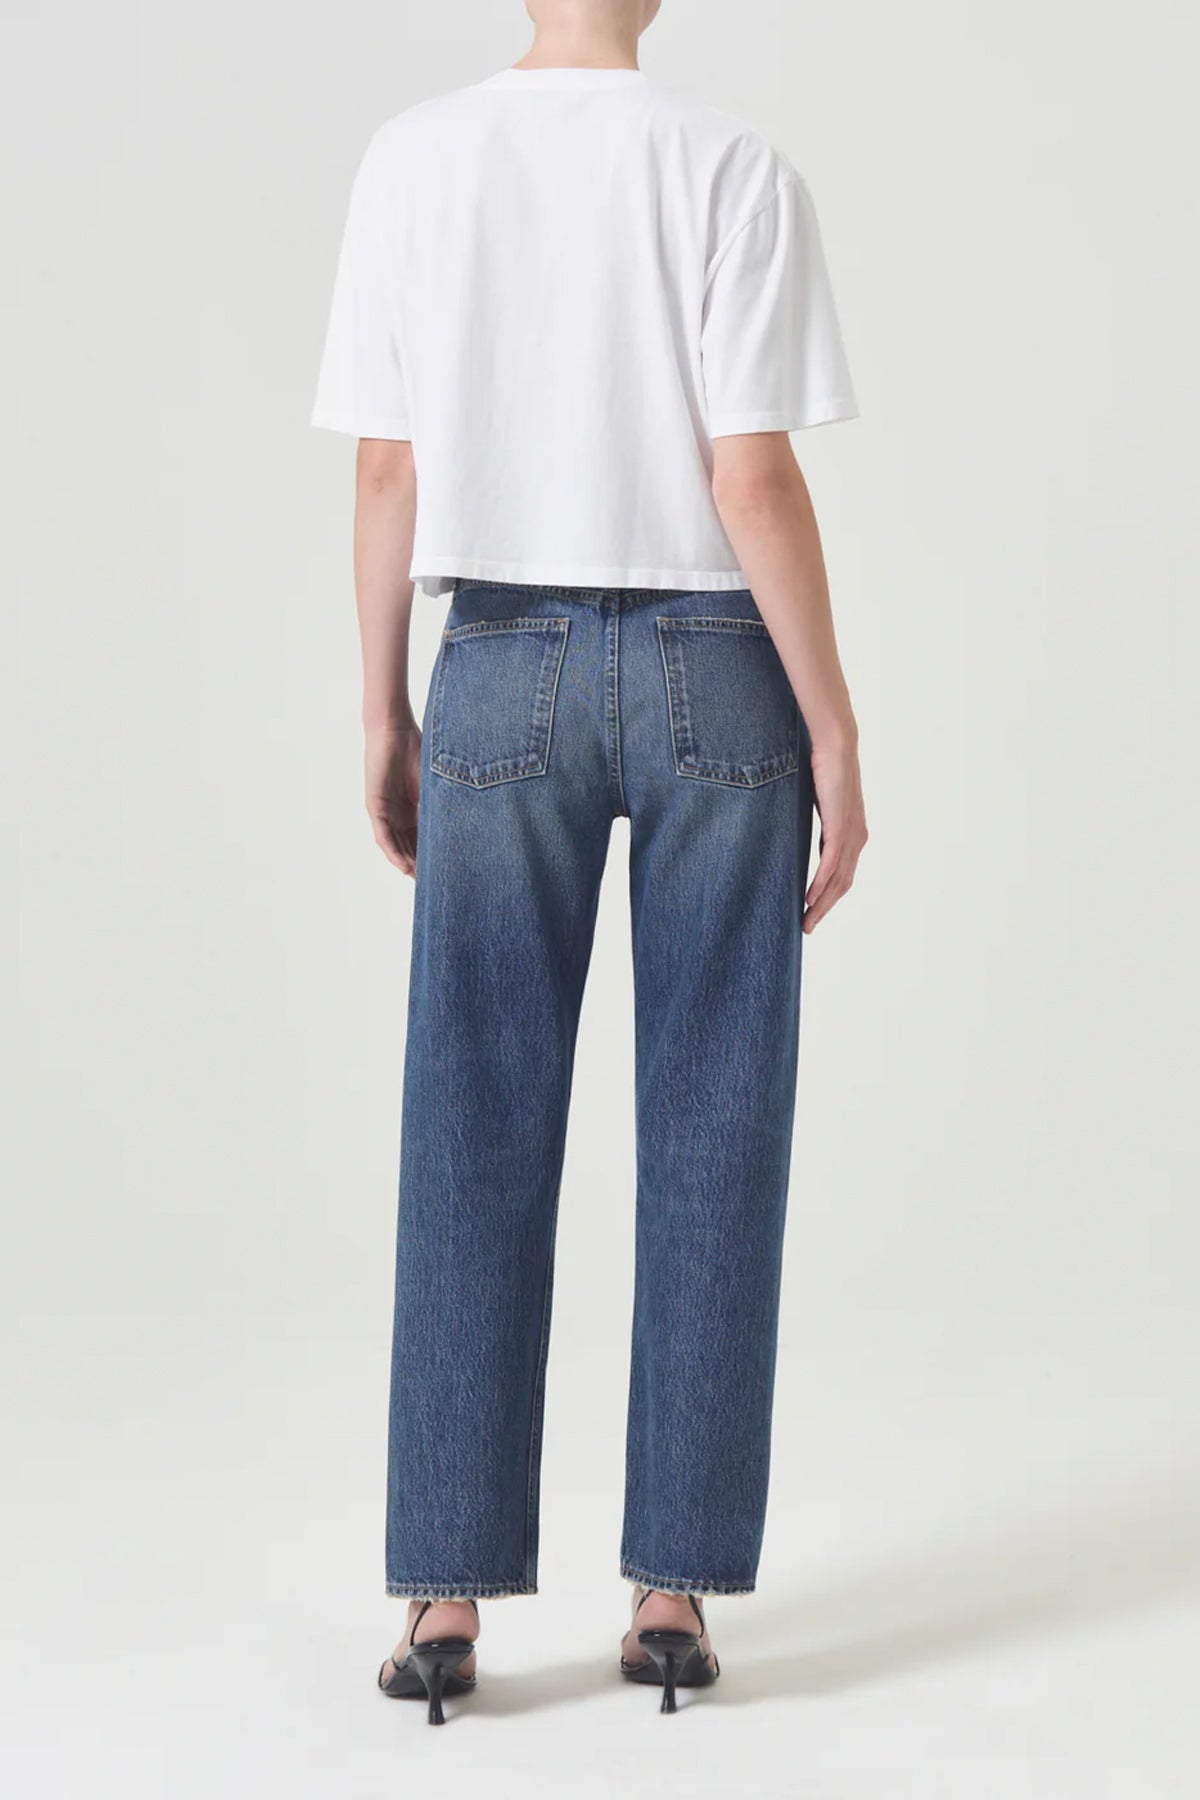 90's Mid Rise Straight Jean in Imagine - shop-olivia.com